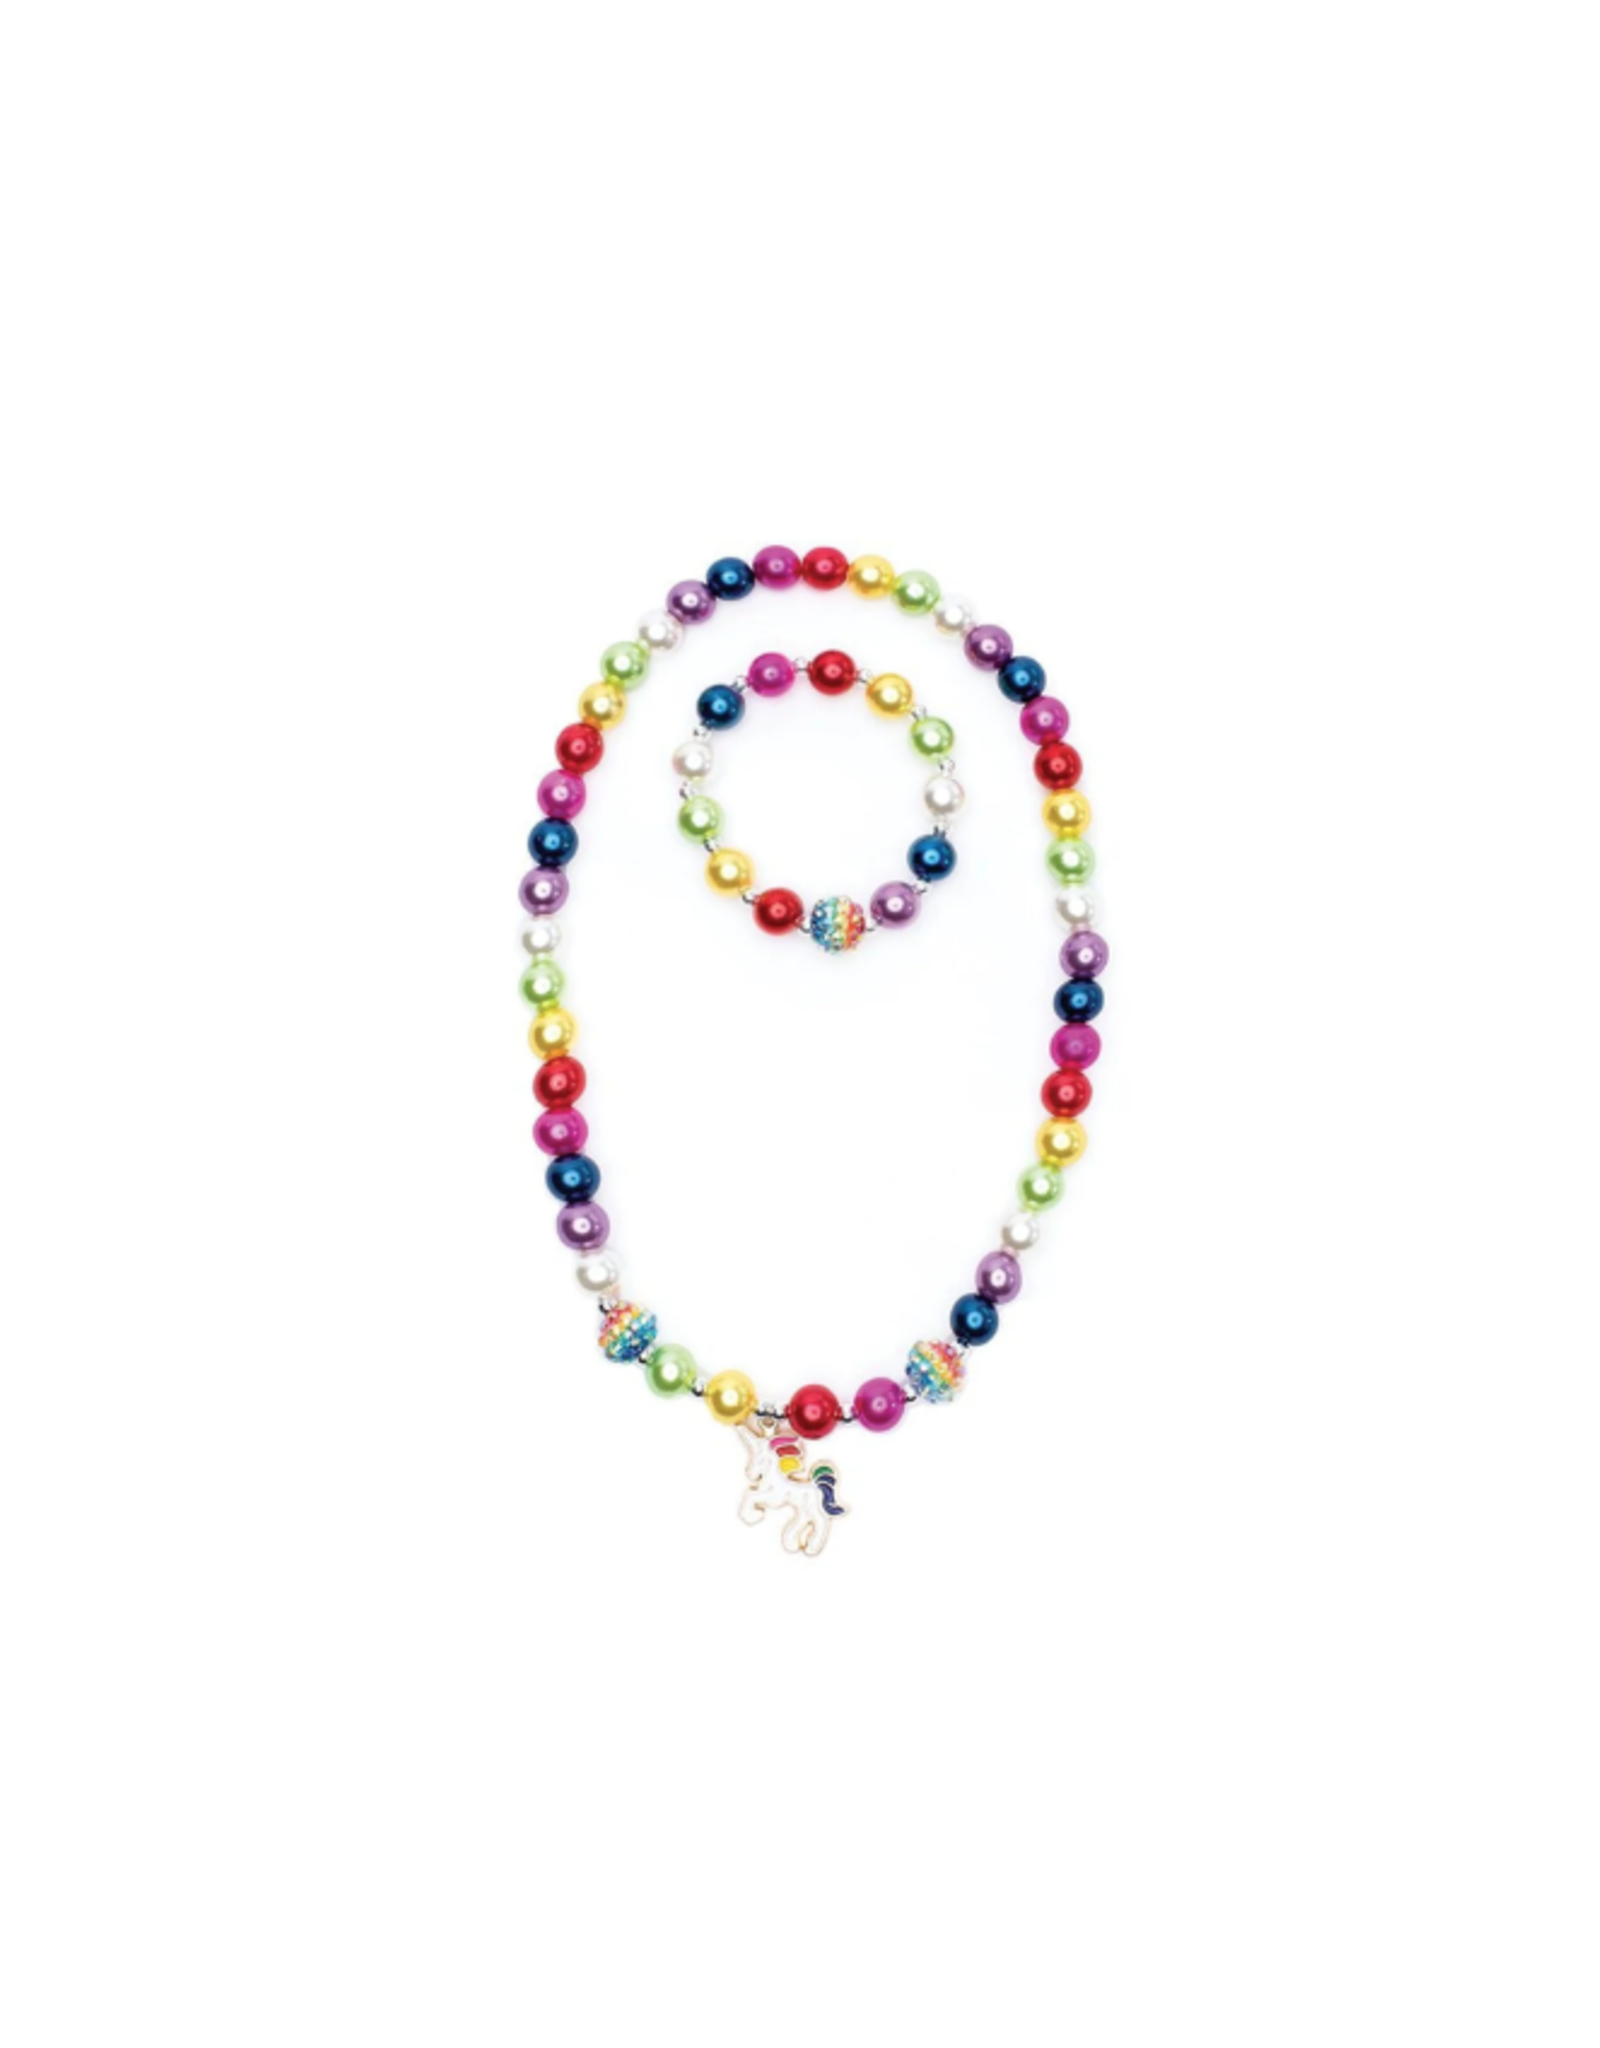 Great Pretenders Gumball Rainbow Necklace & Bracelet Set, 2pc